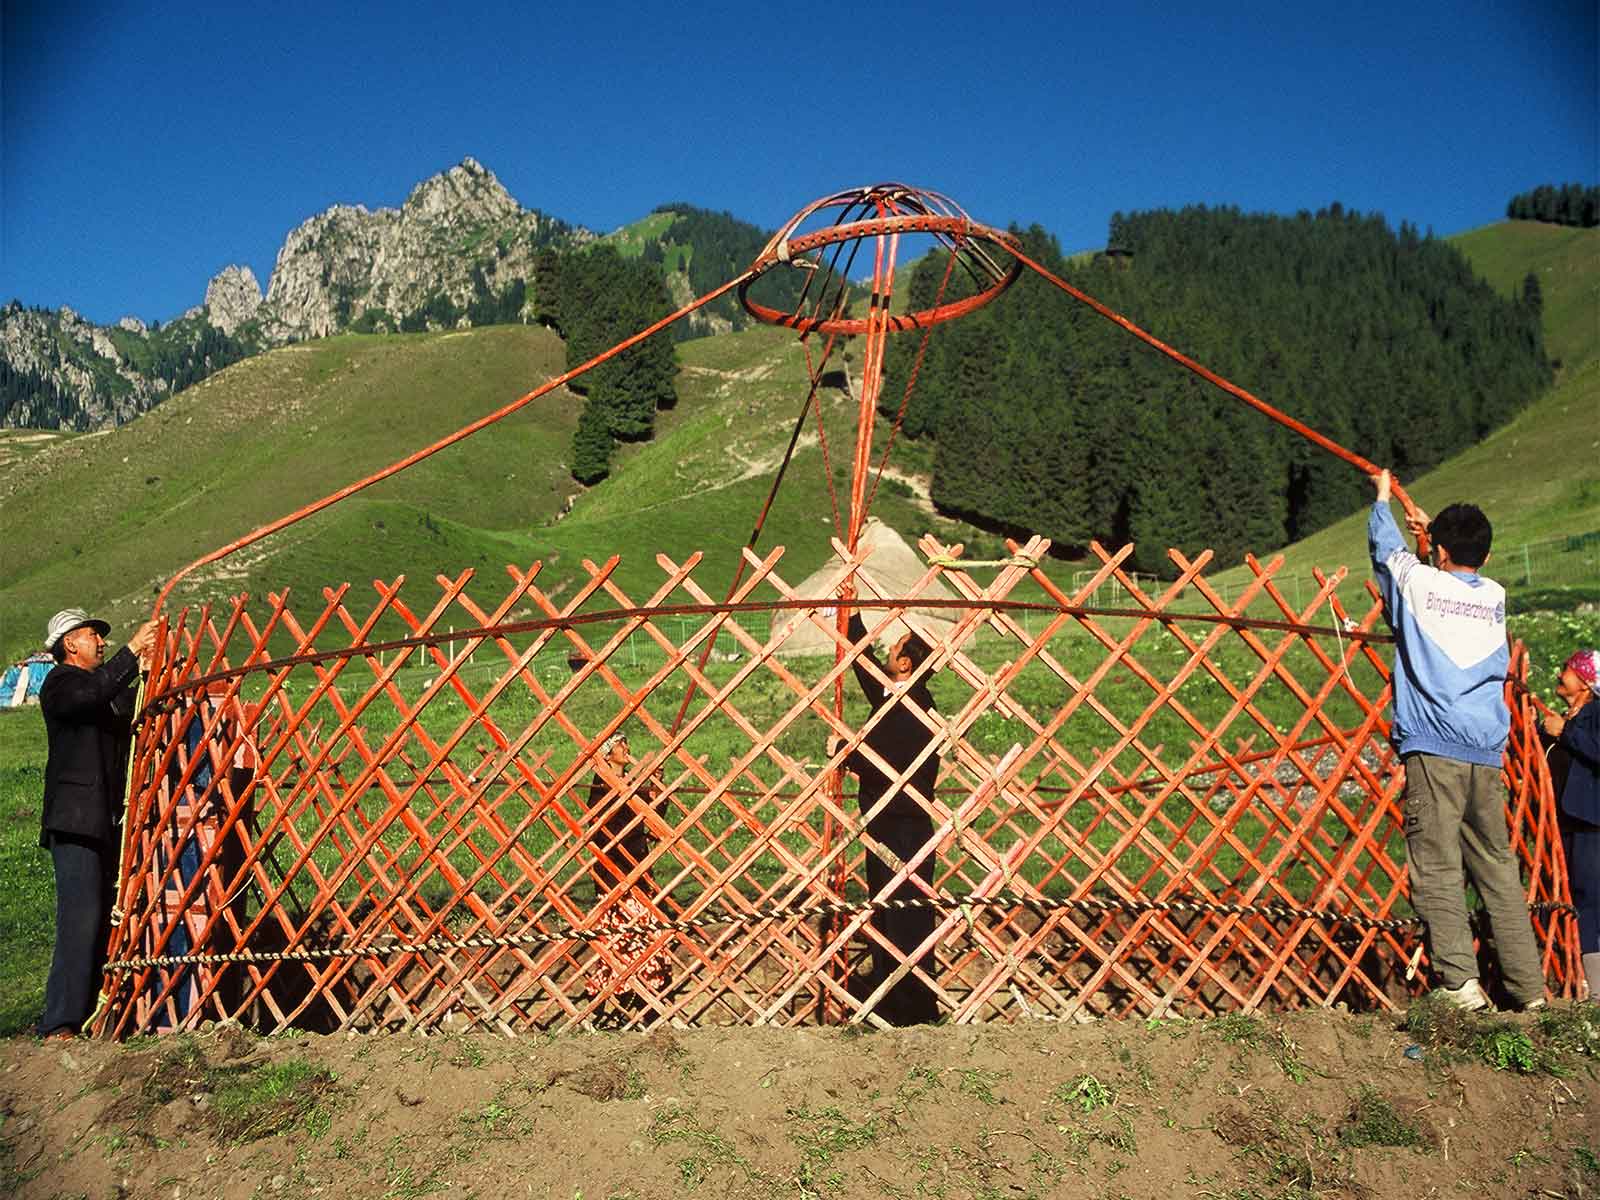 Kazakh family Constructing a Yurt in the Tianshan - Heavenly Mountains - Xinjiang China - Silk Road Research - Dr Steven Andrew Martin - Photo Journal